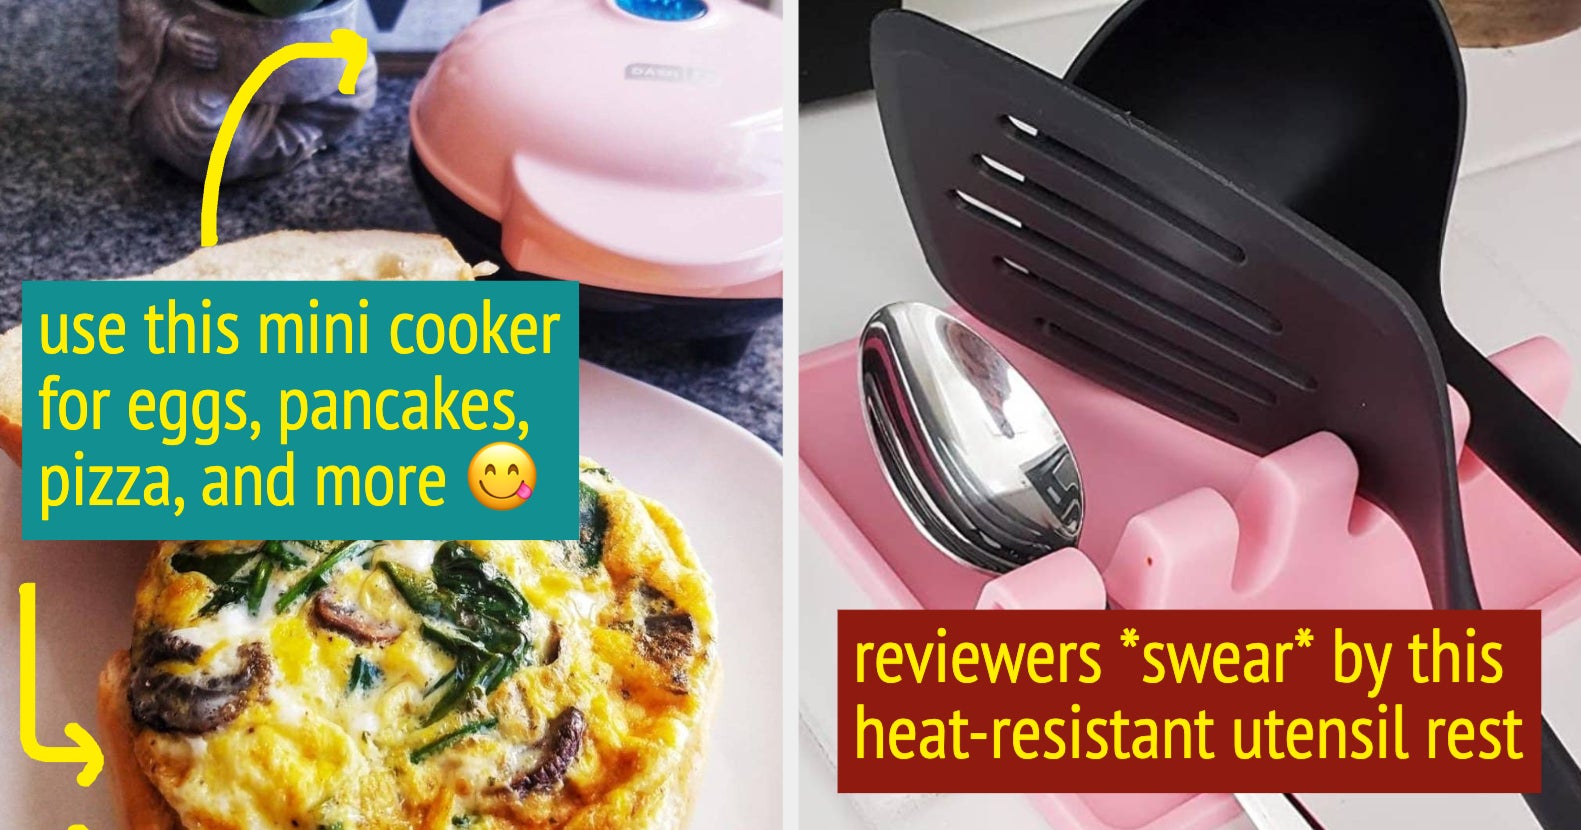 BuzzFeed Tasty Kitchen Gadget Review